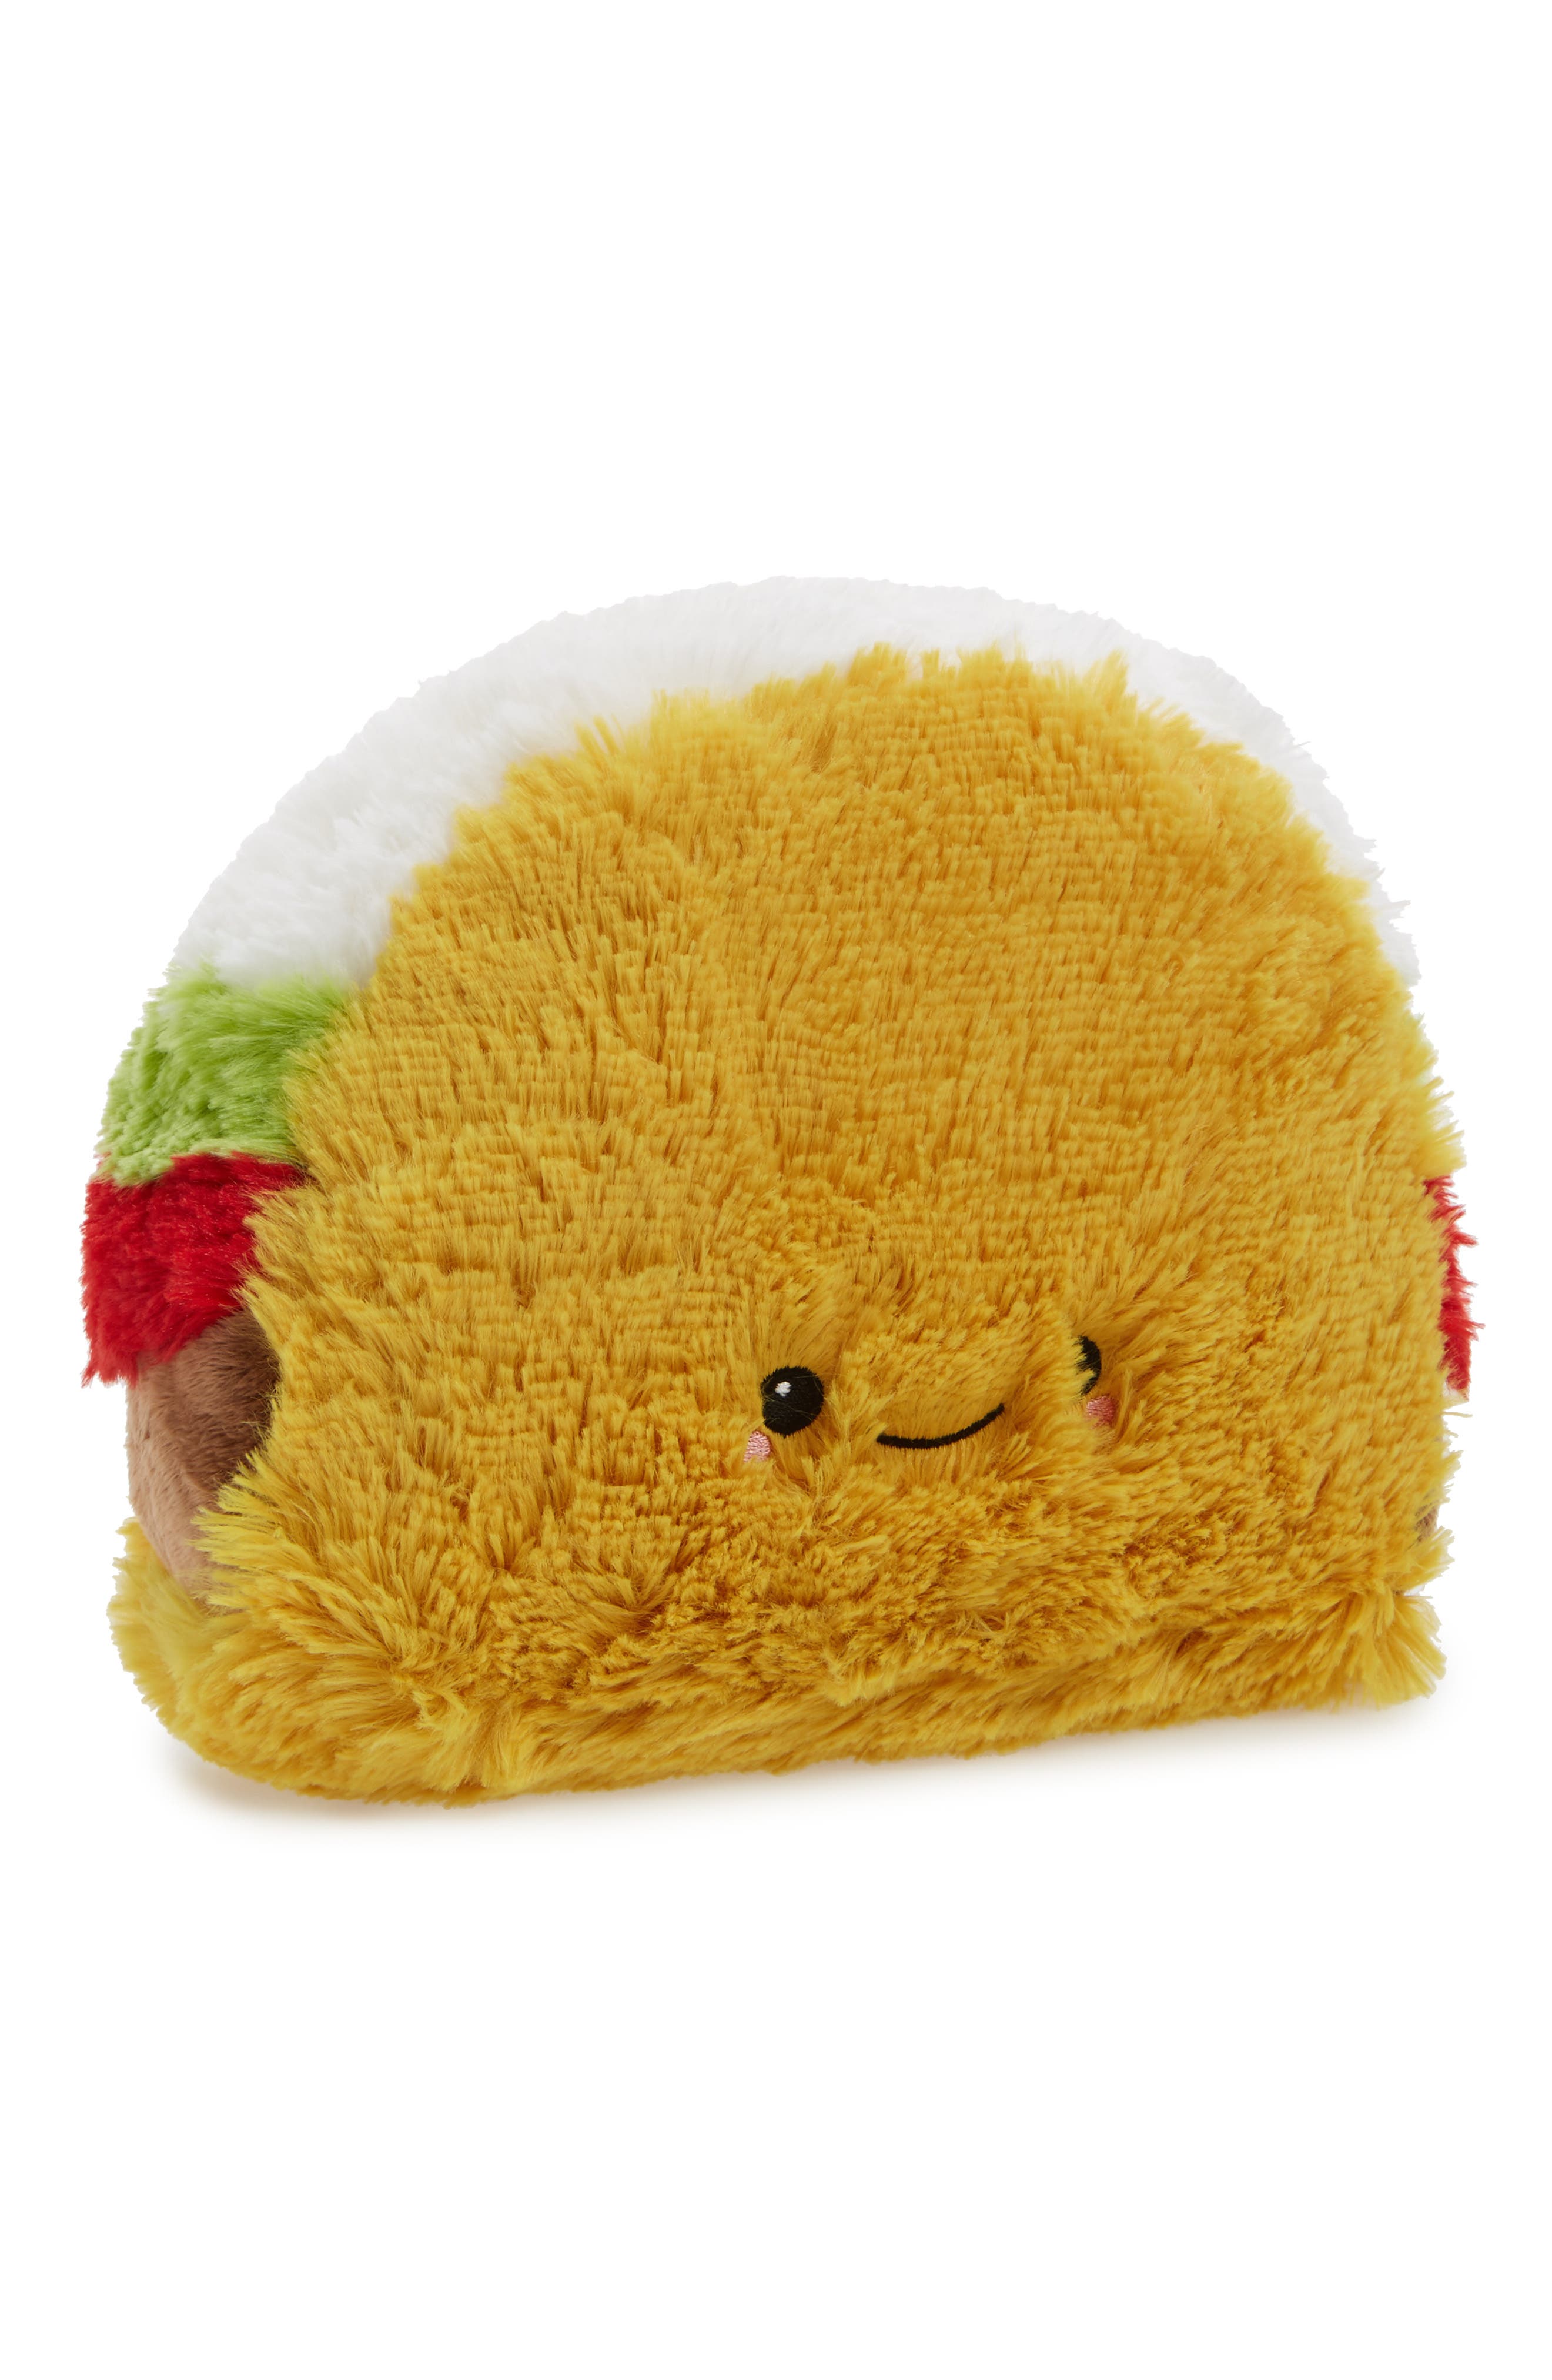 taco stuffed animal